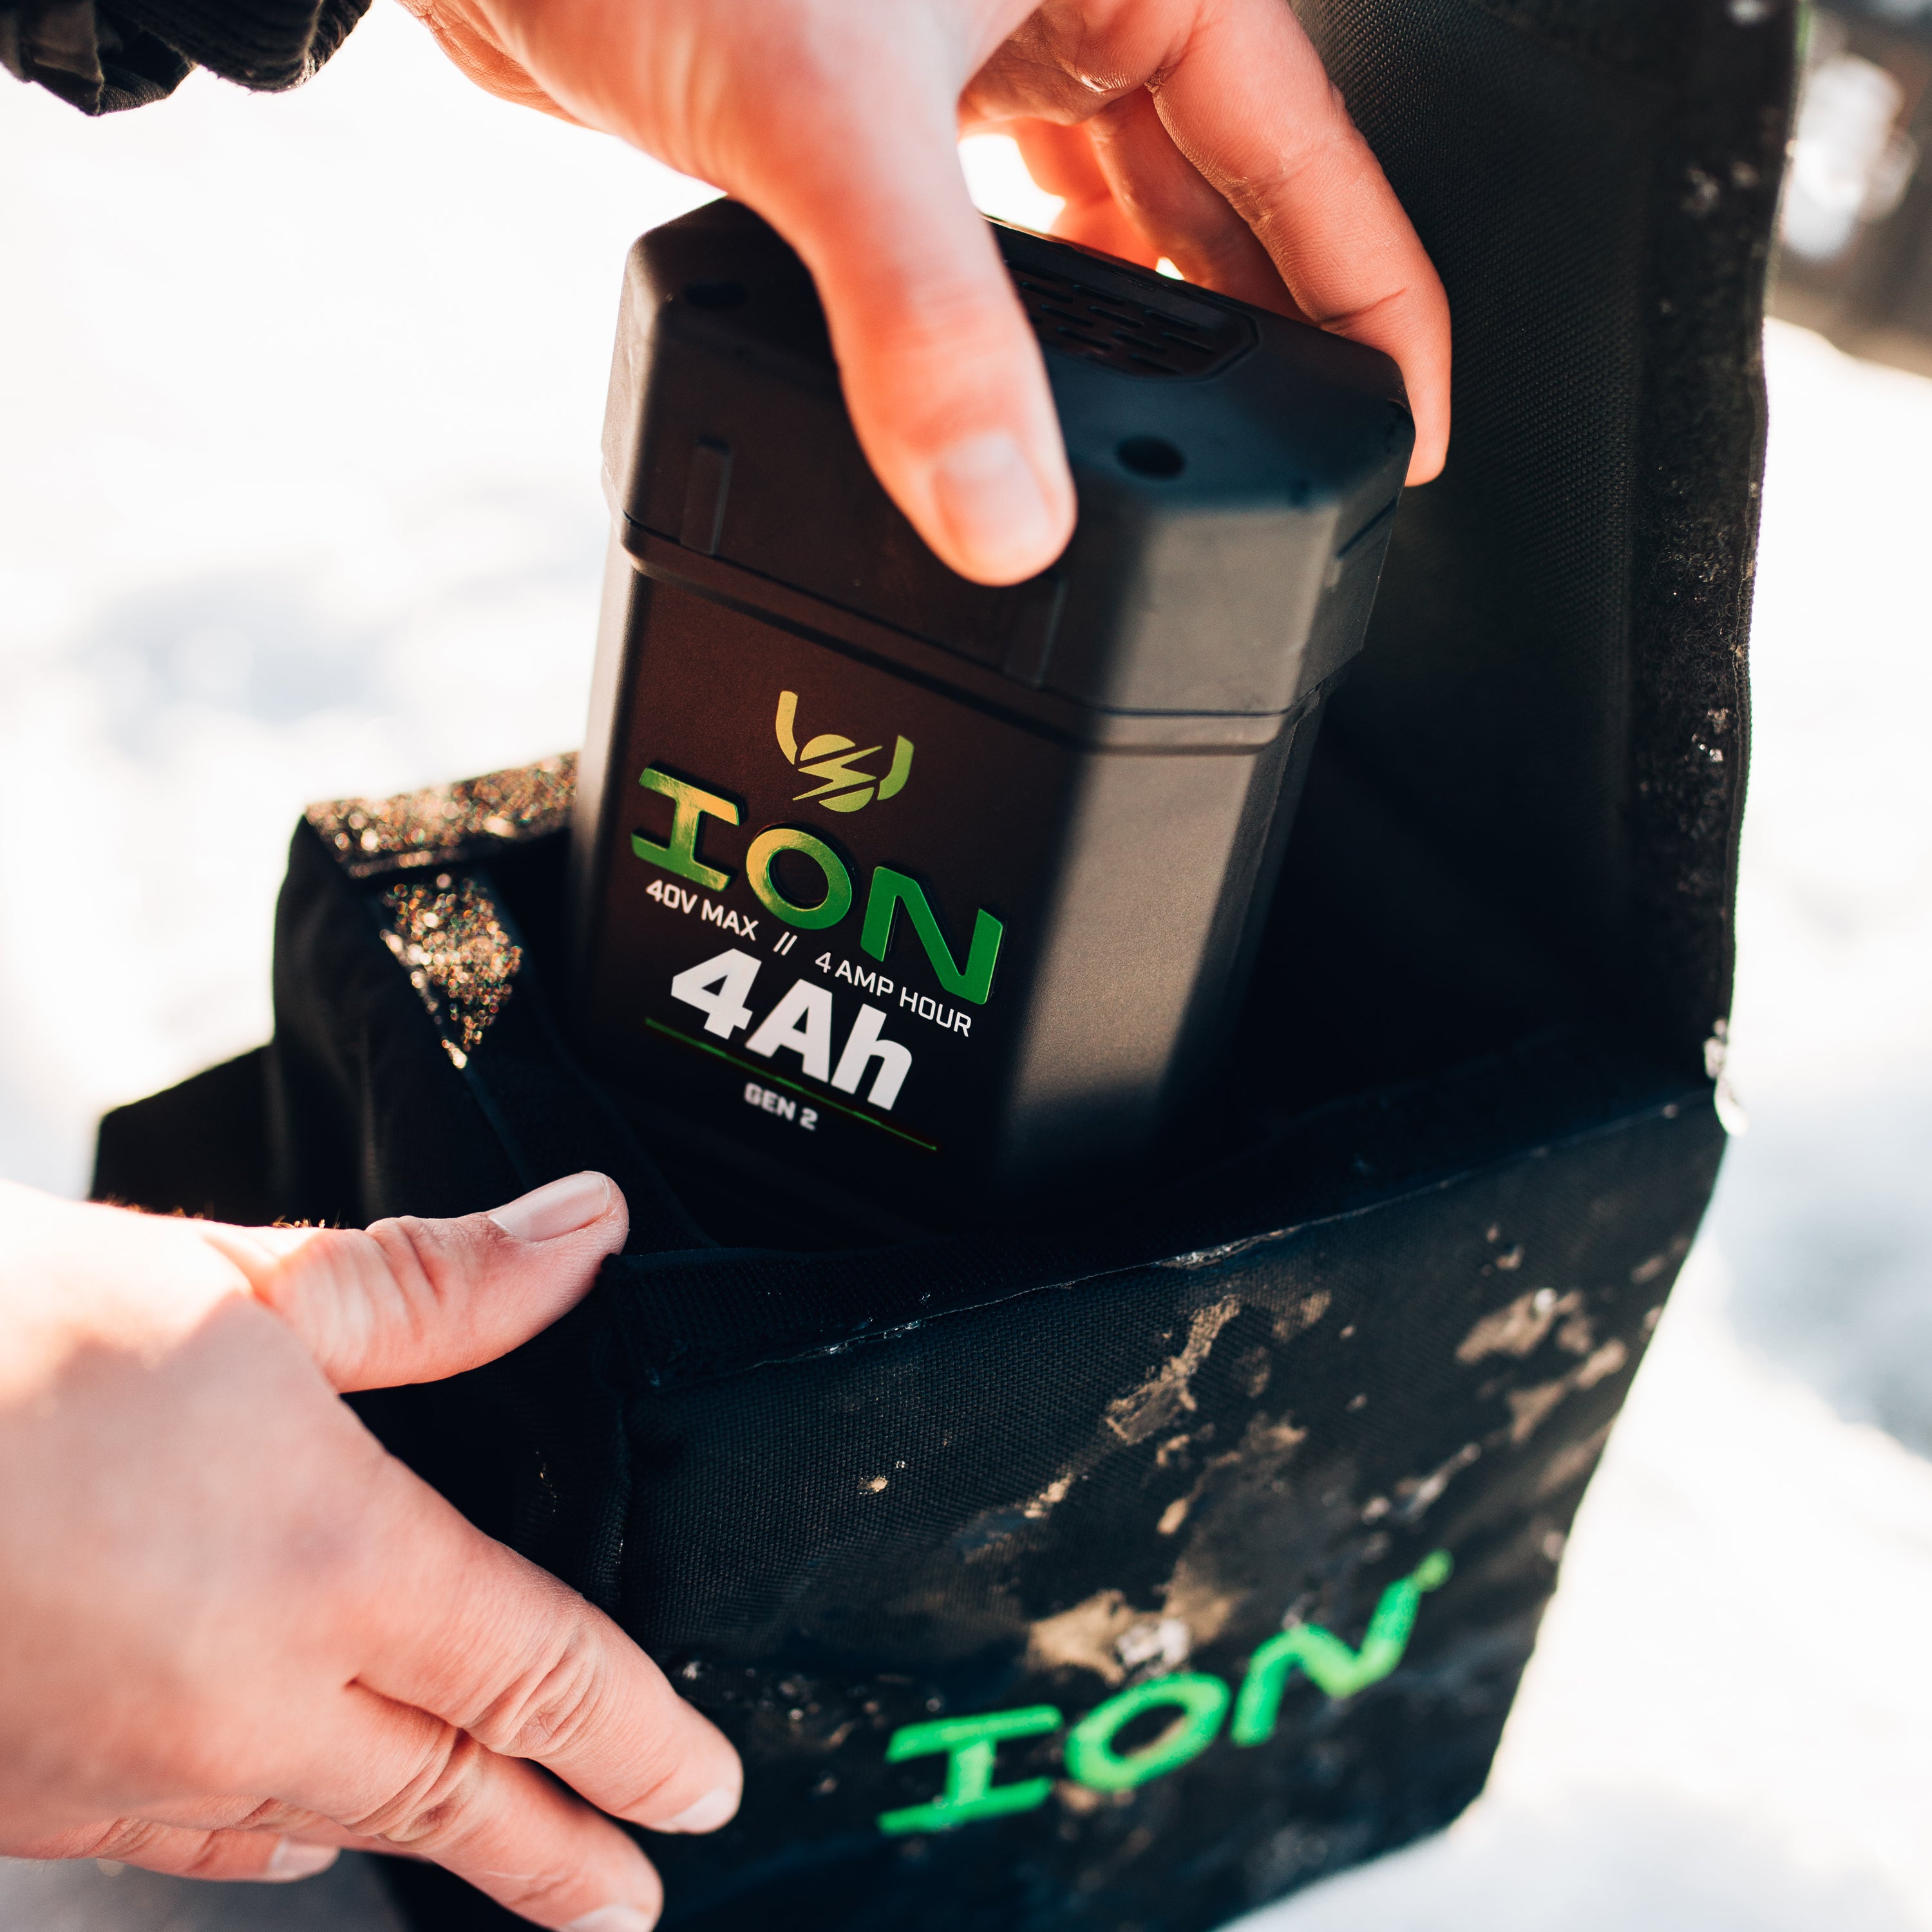 ION® 4Ah Battery (Gen 2) – ION Ice Fishing